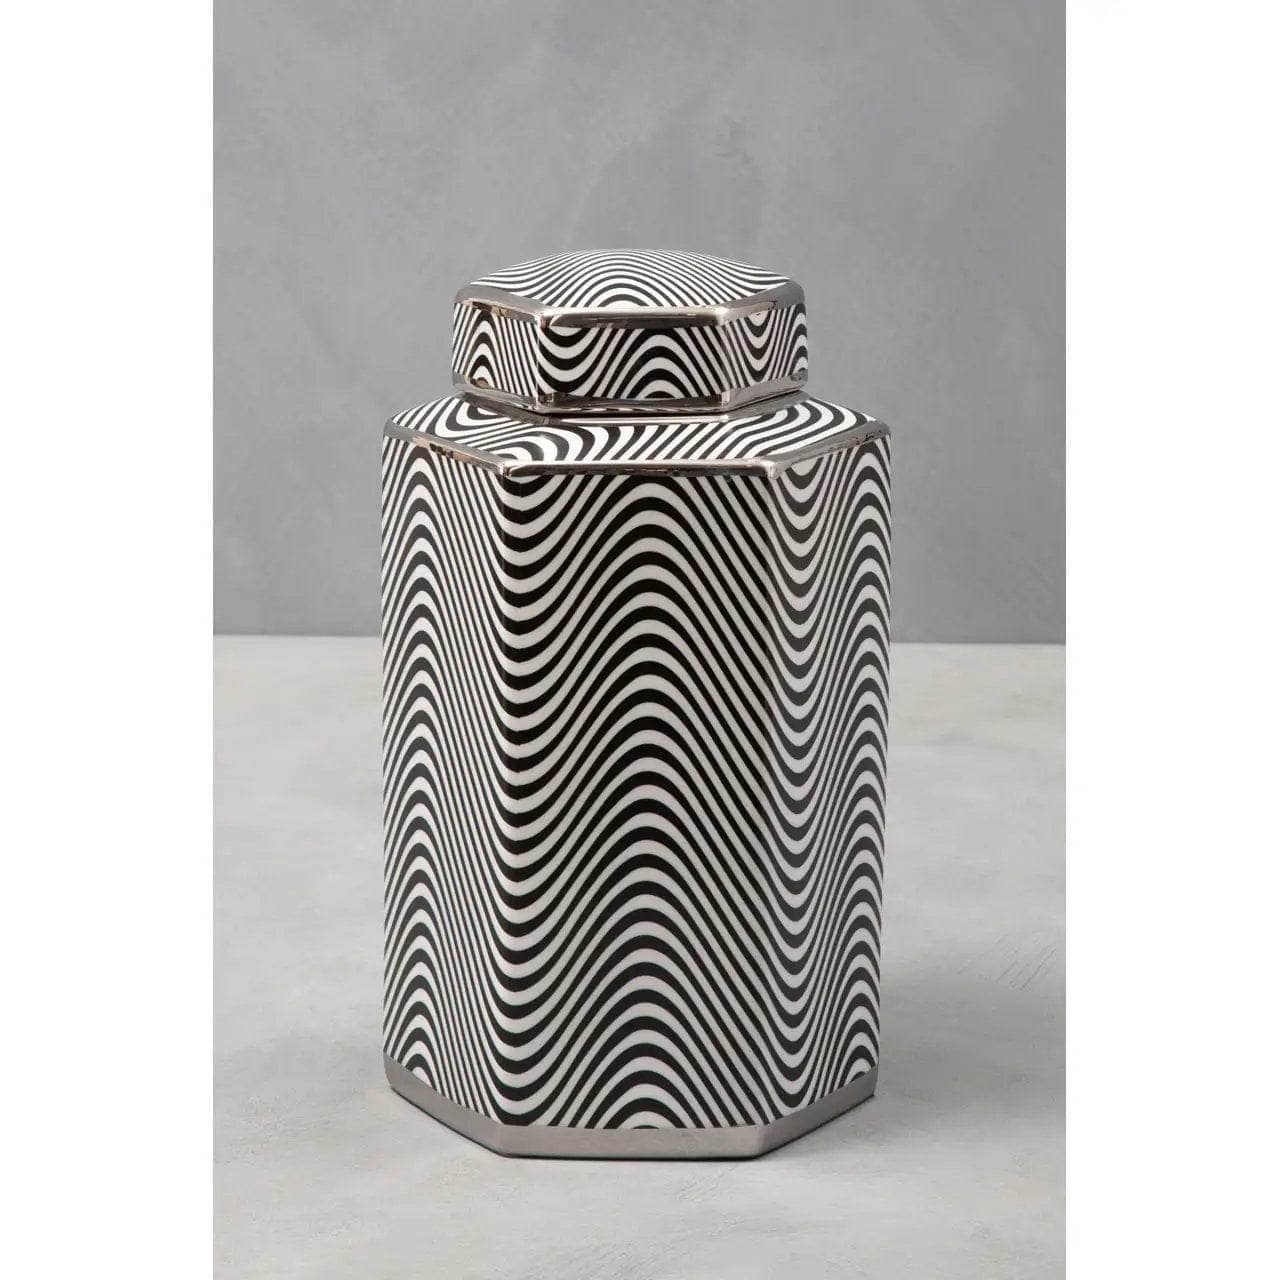  -  This Prem Celeste Hexagonal Jar, Blk/Wht Ceramic Small 5505820  -  60003188